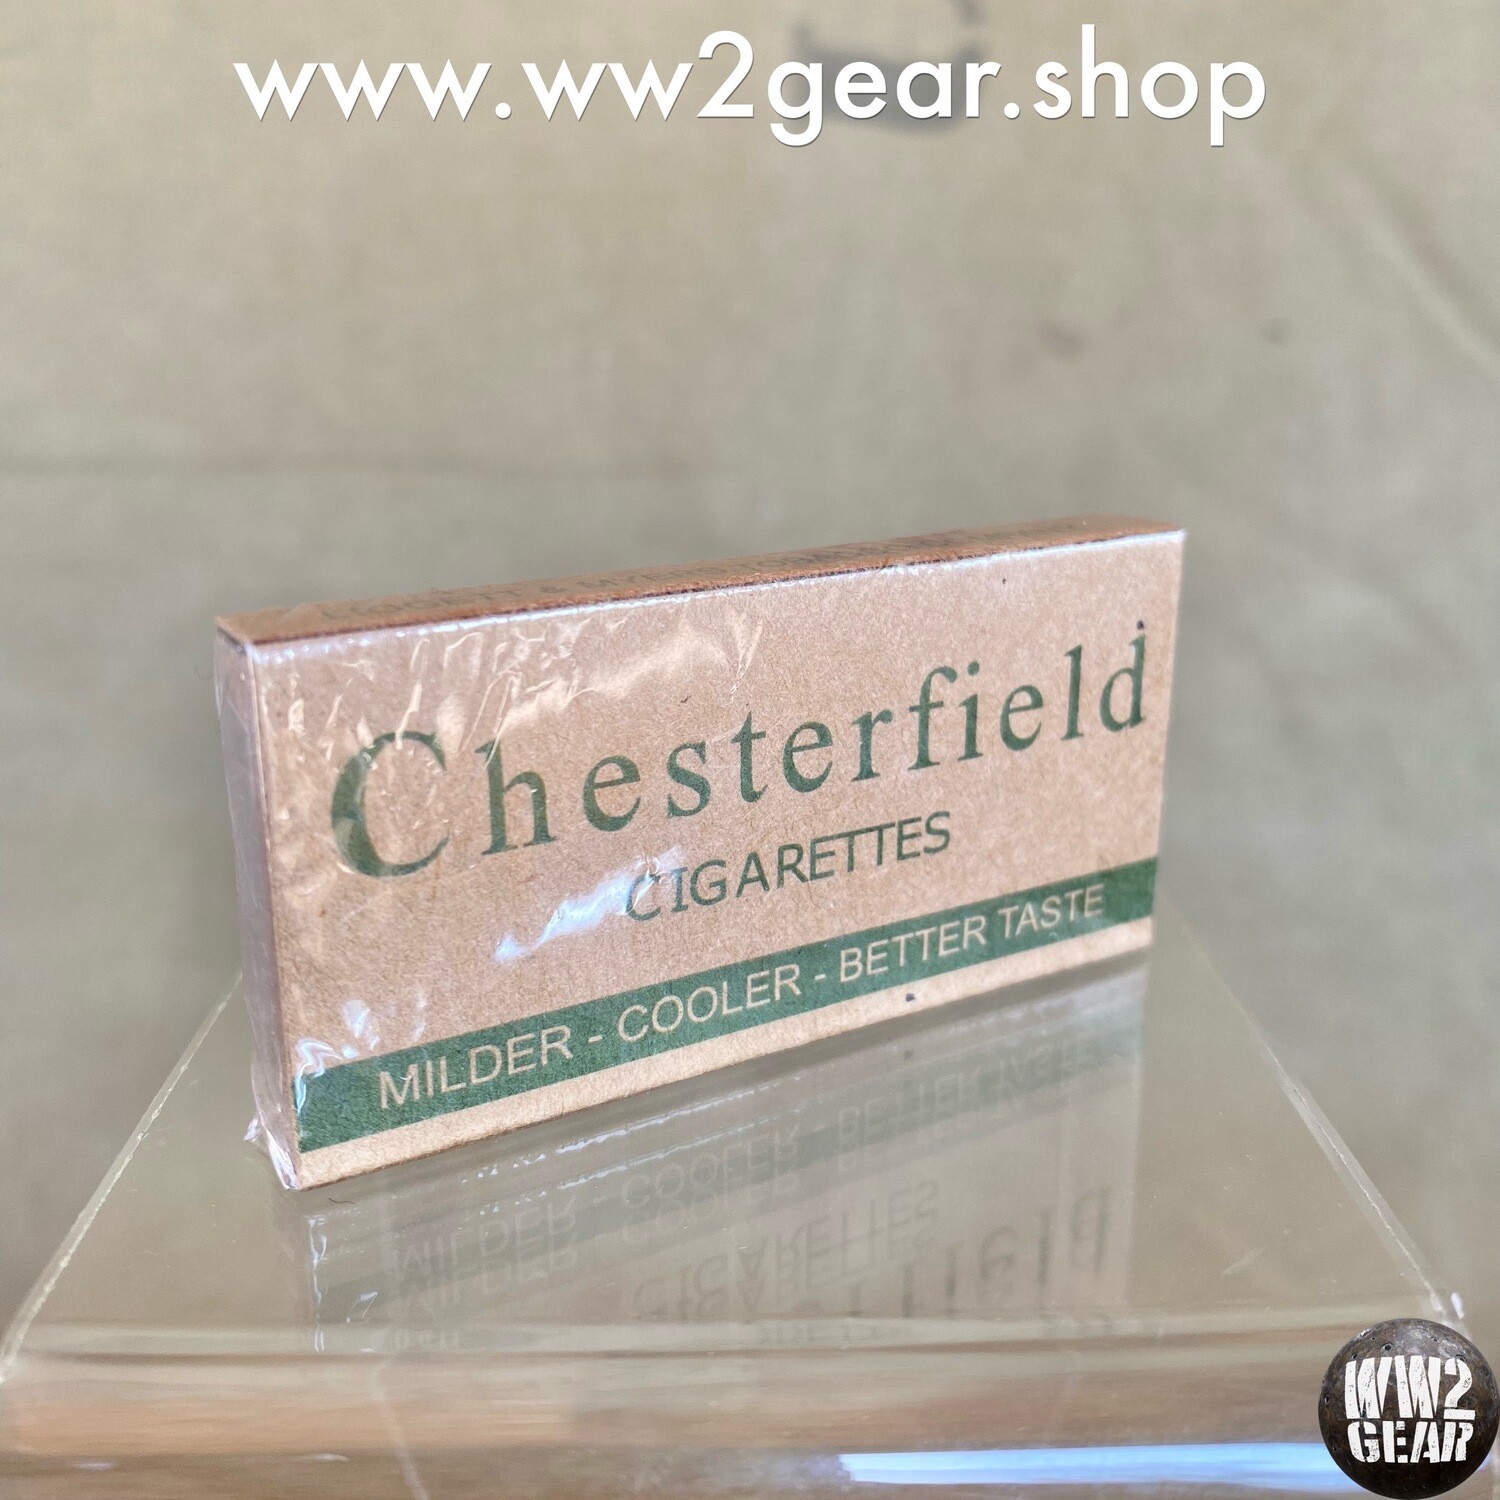 U.S. Chesterfield Cigarettes (Reproduction)